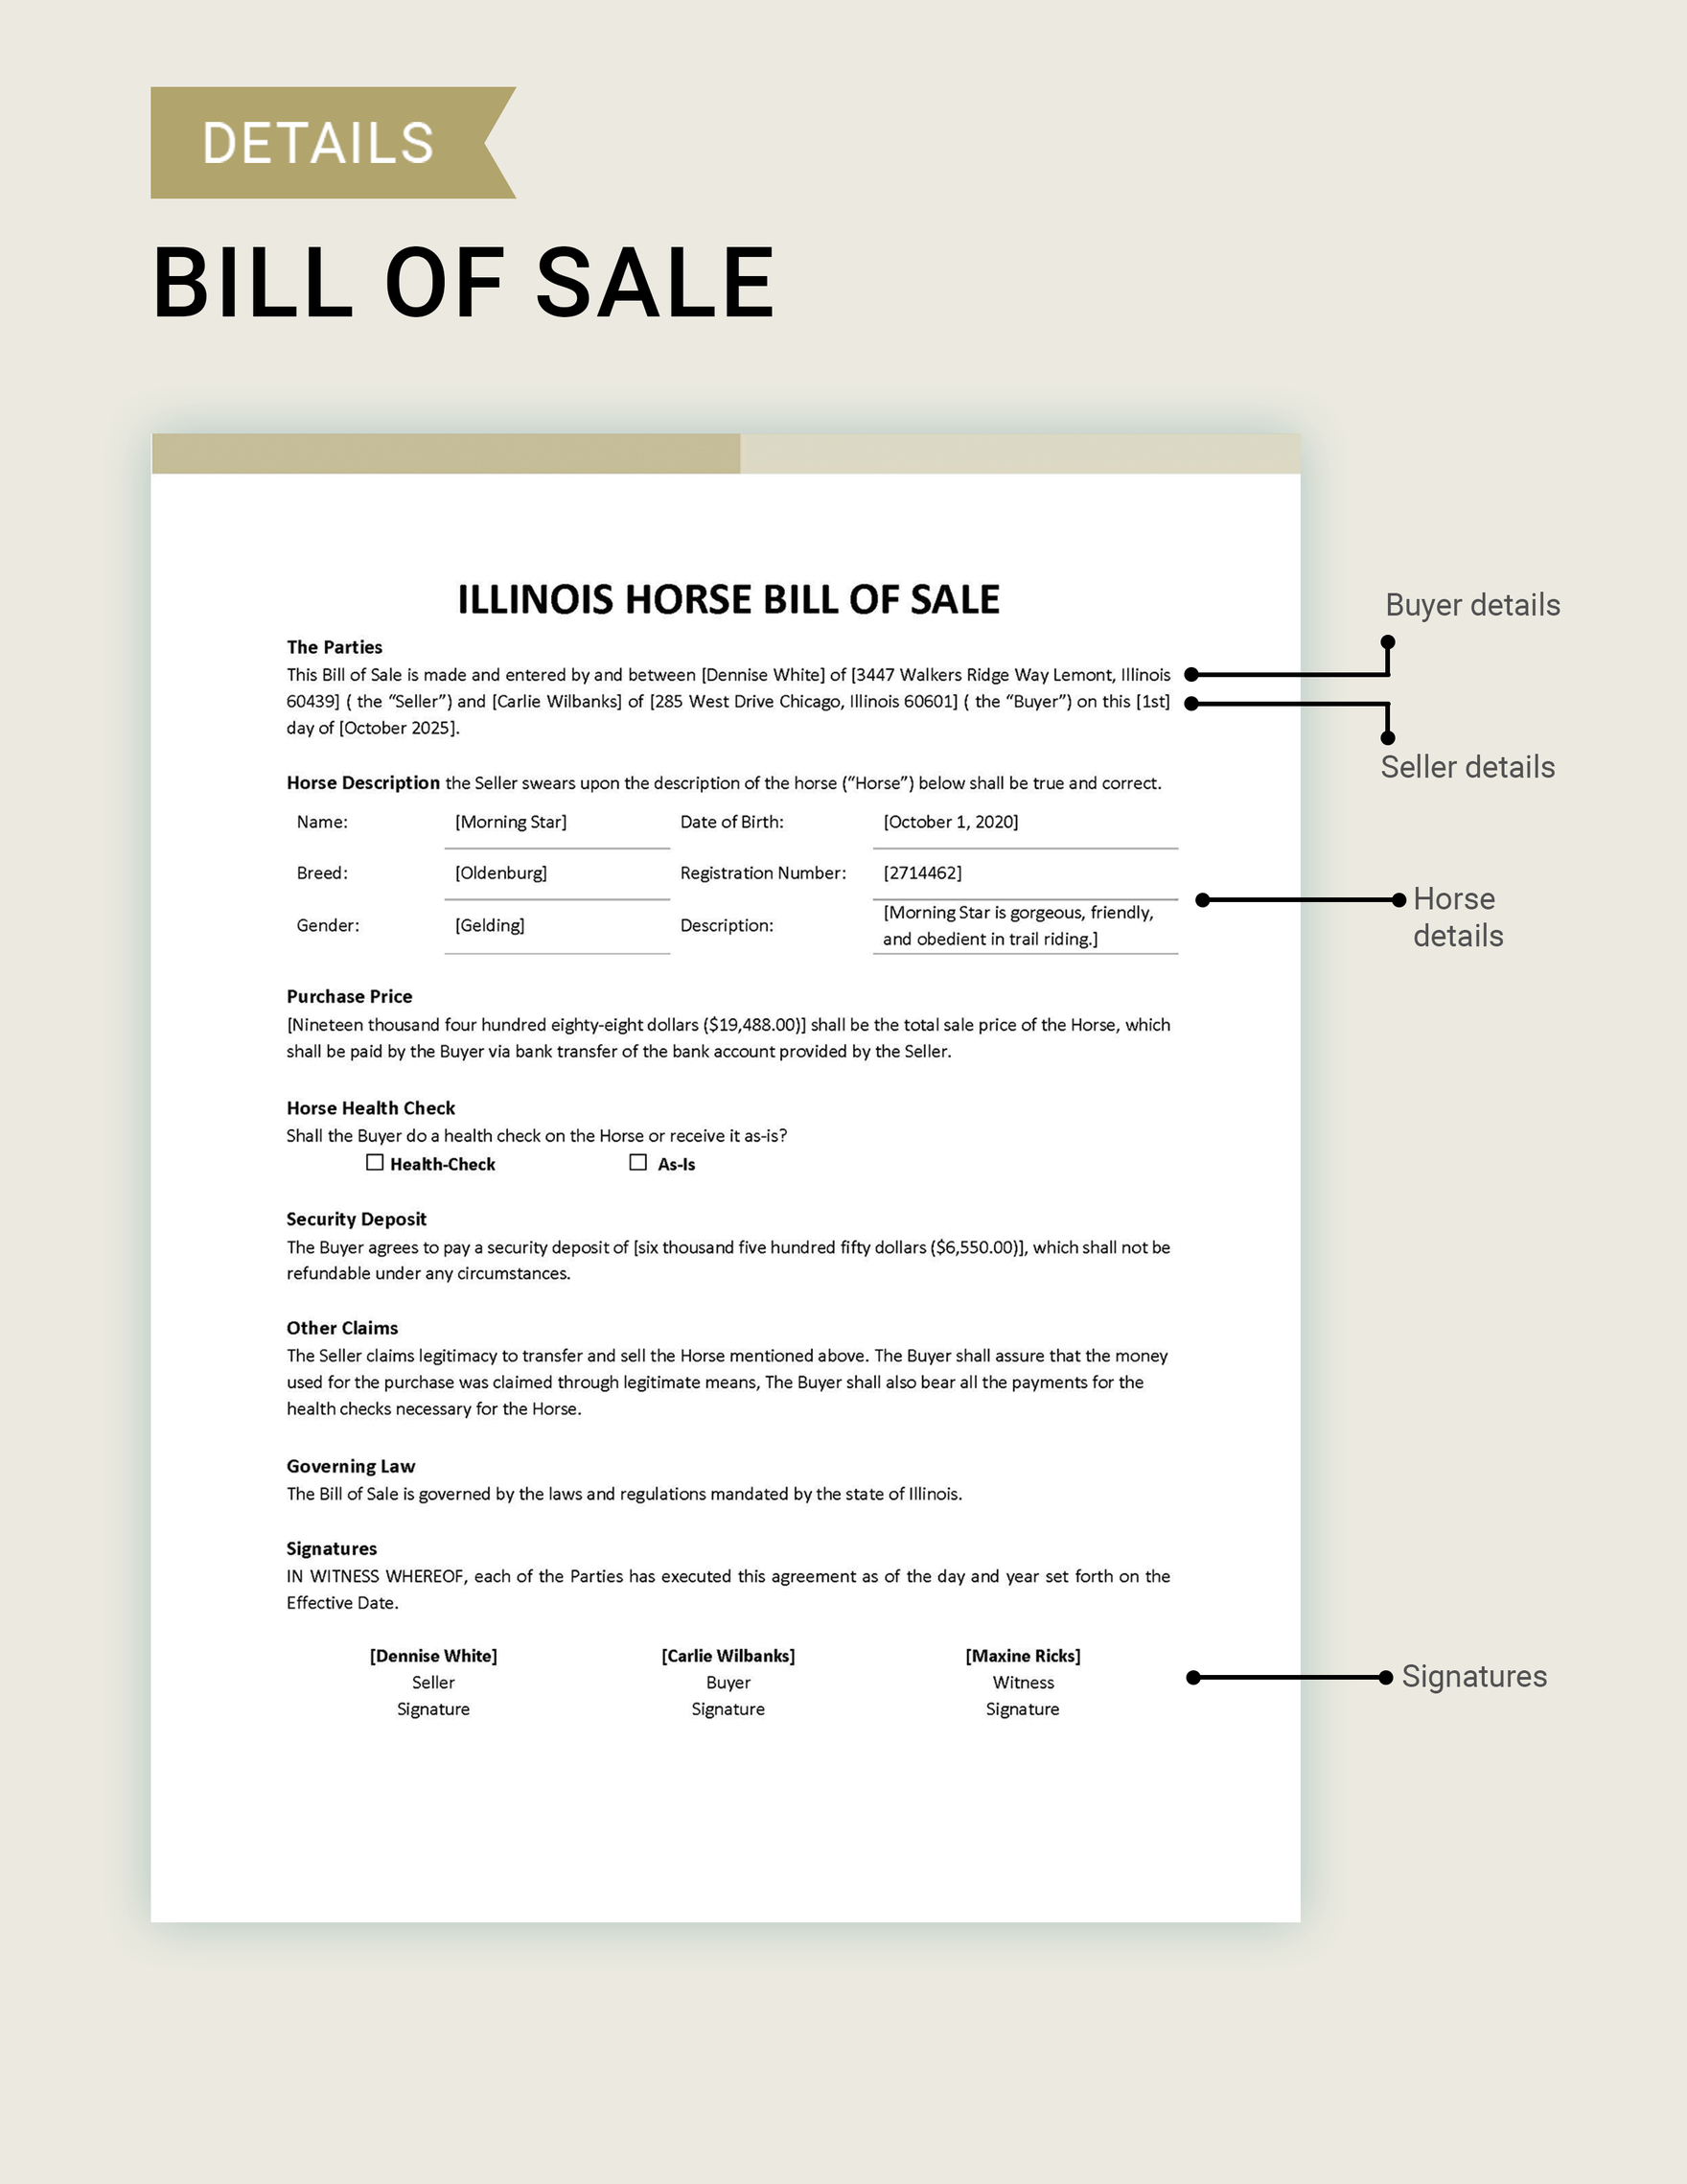 Illinois Horse Bill of Sale Template